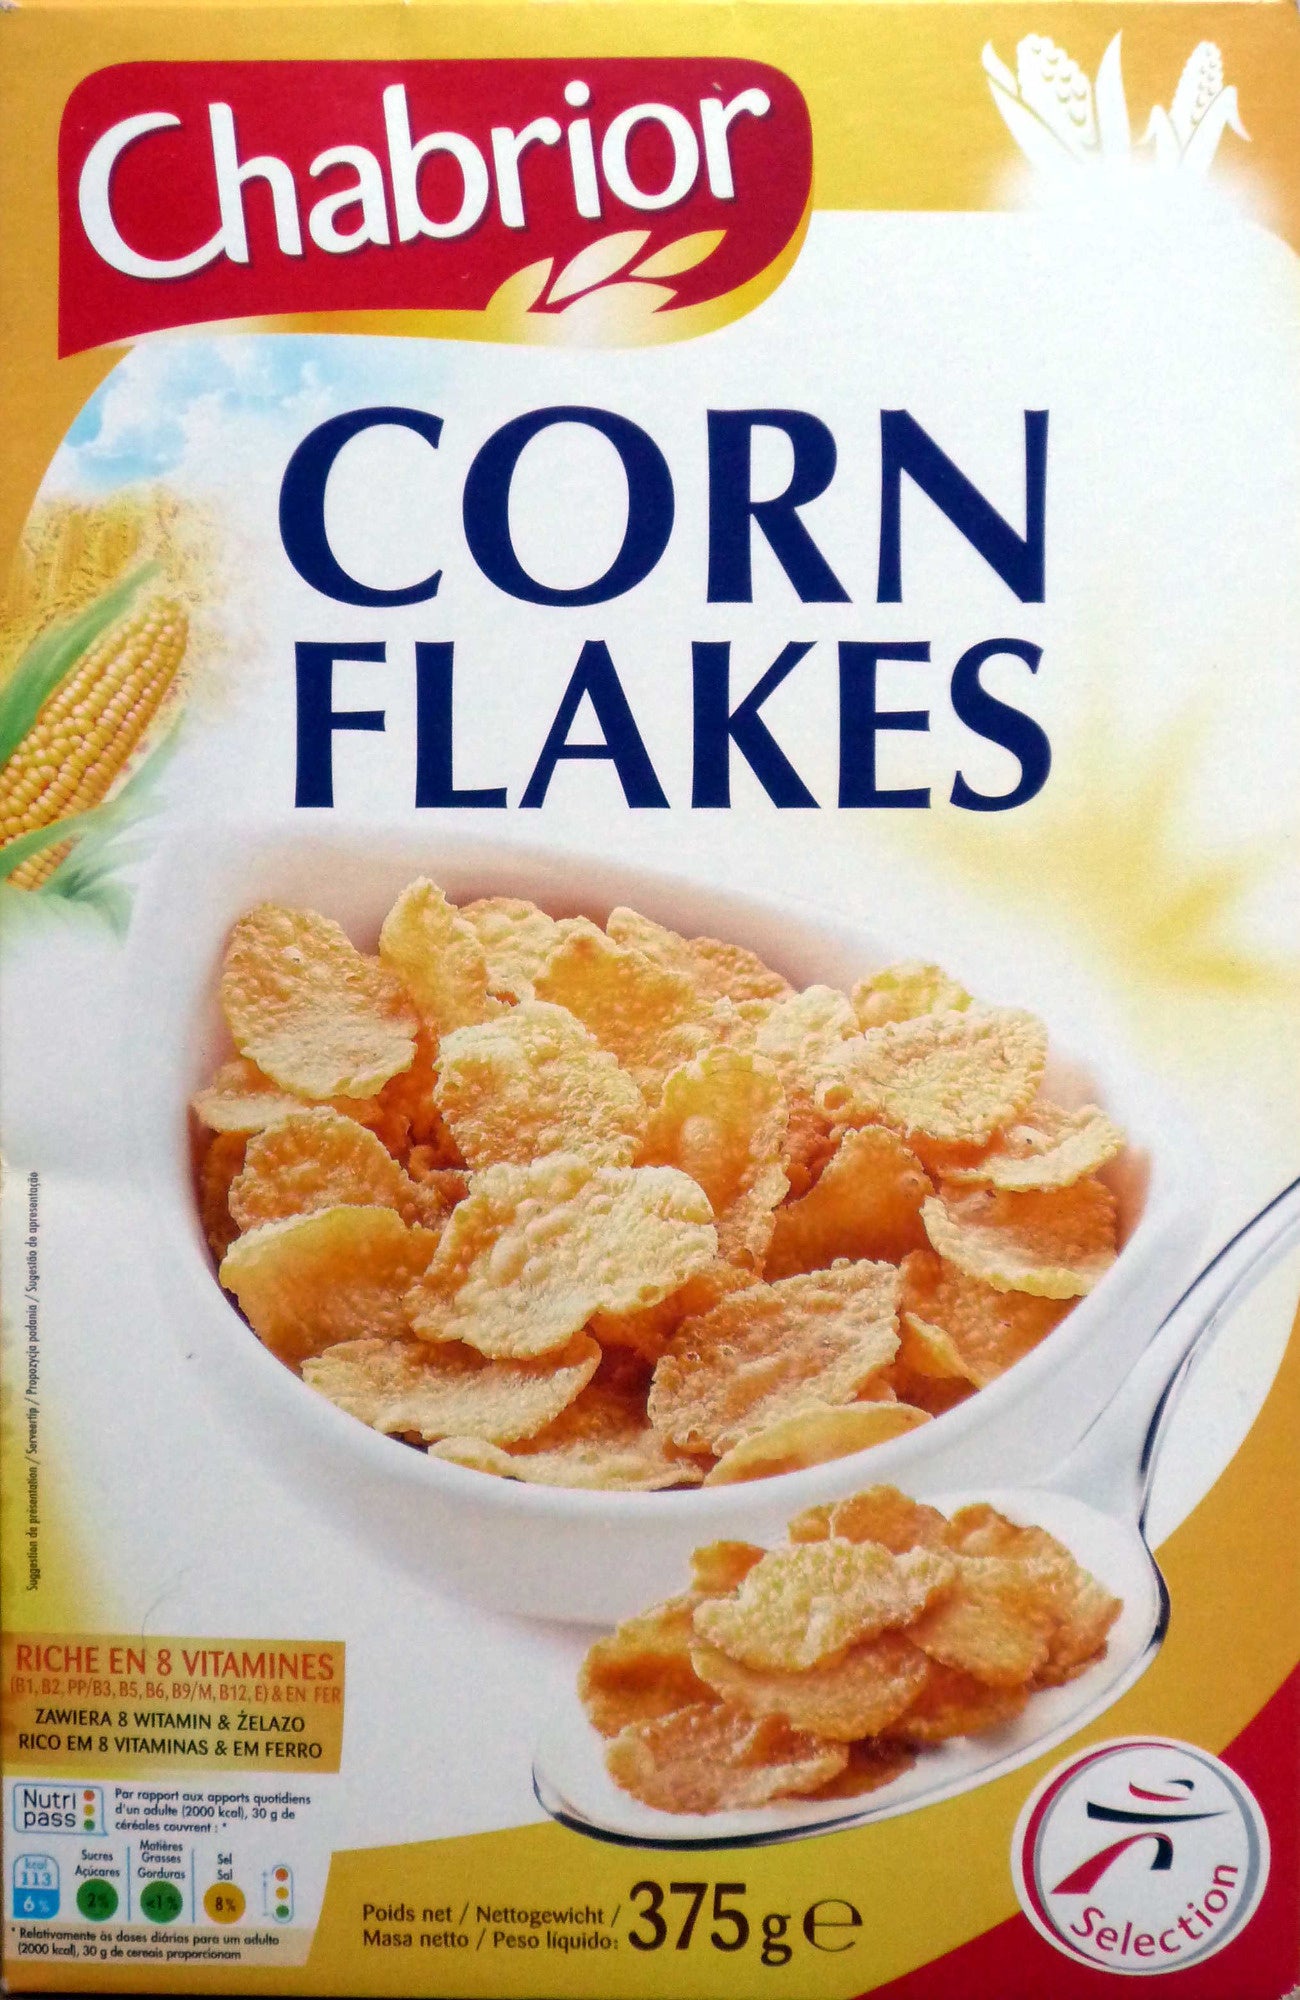 sey>Chabriol Corn flakes, 500g